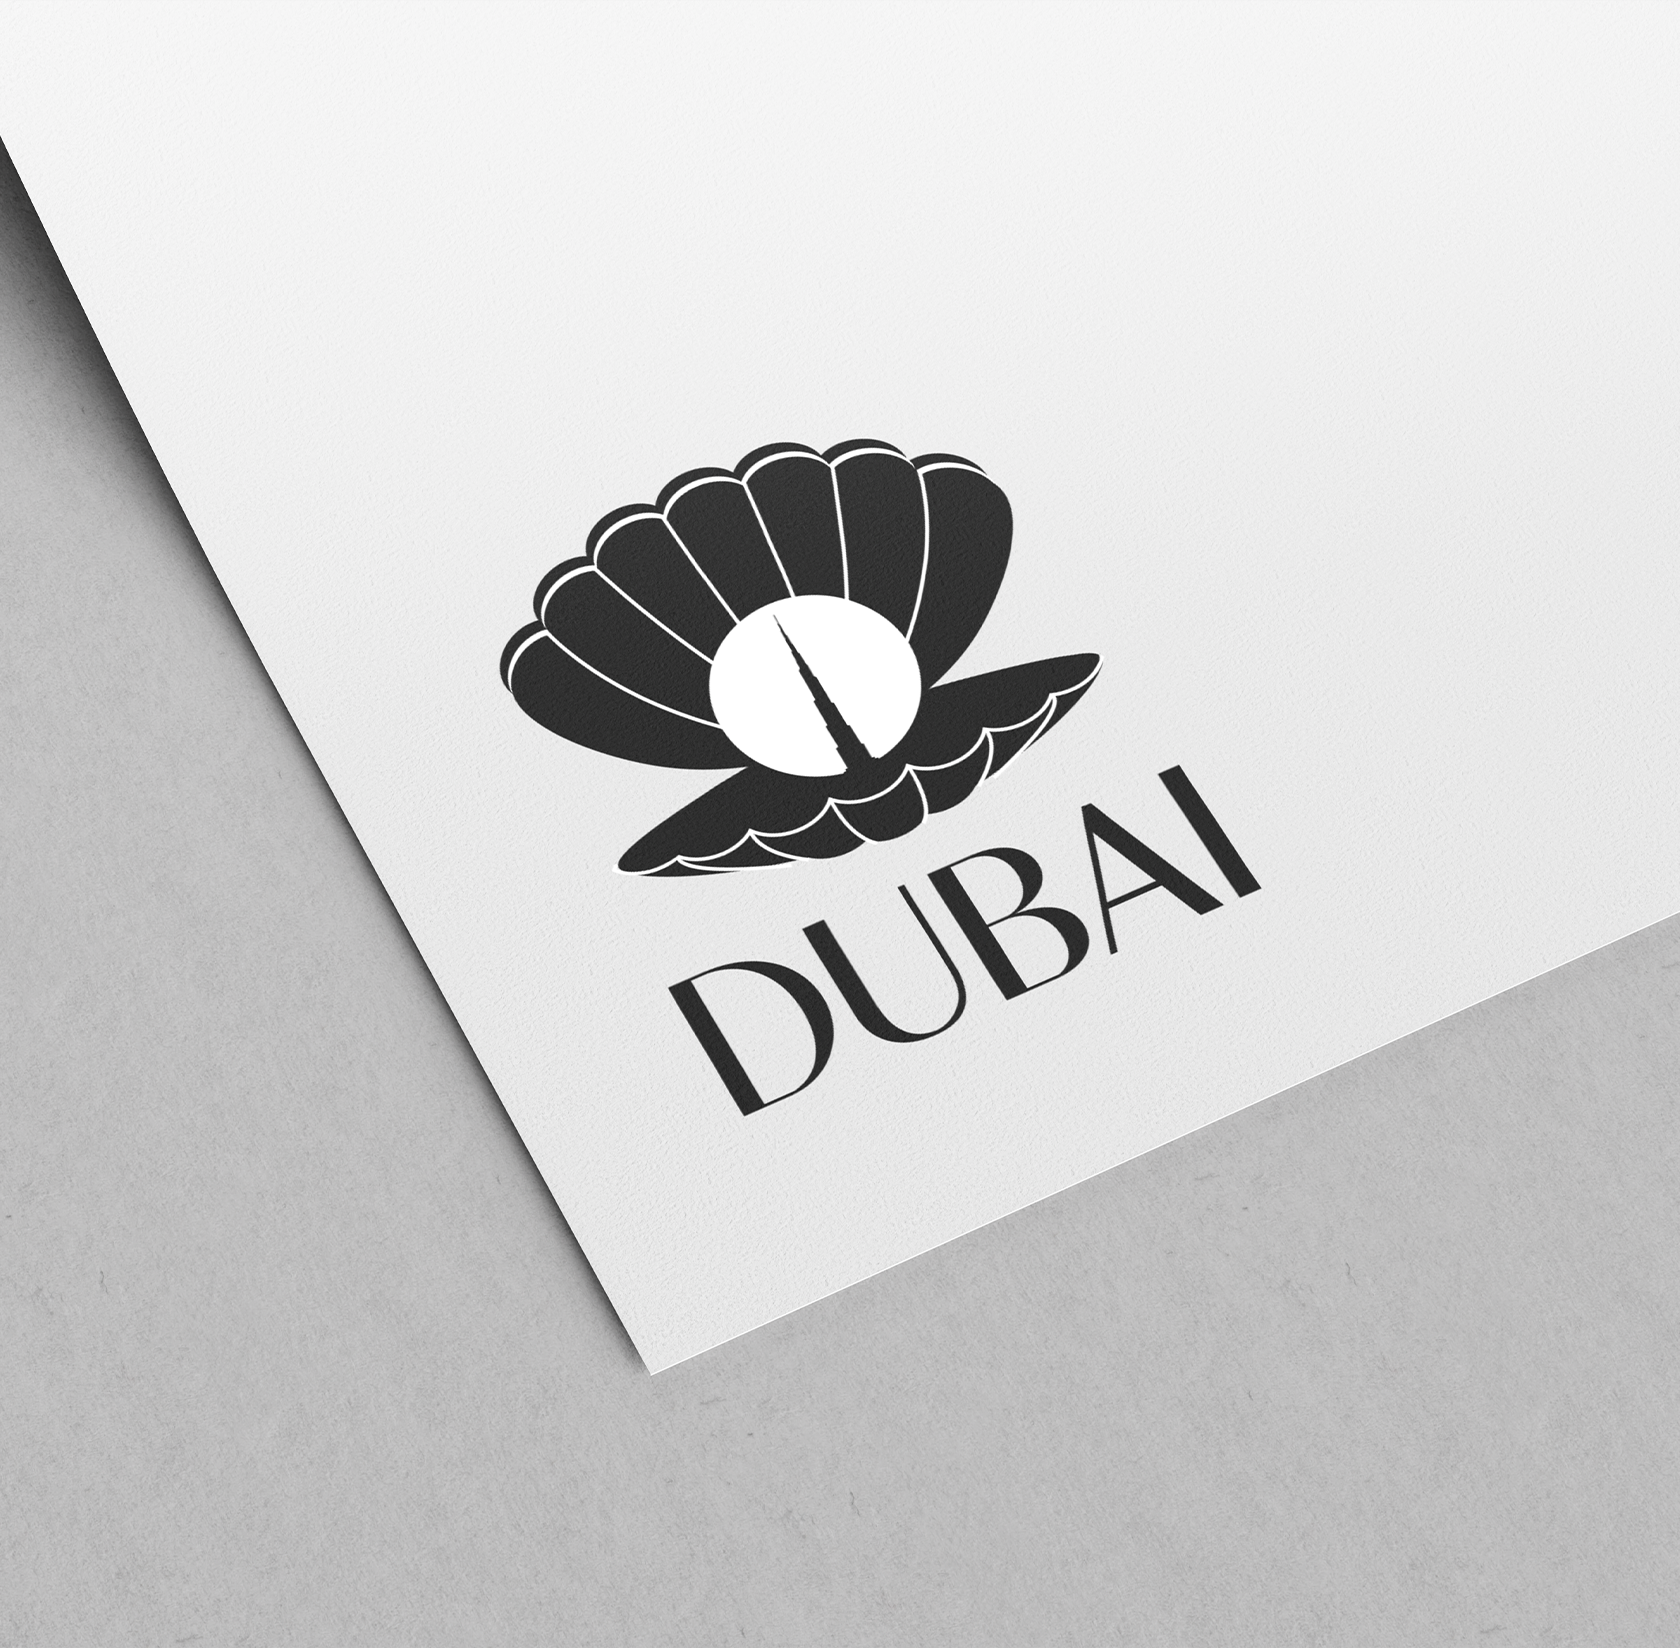 Dubai stamped page of Tourism logo